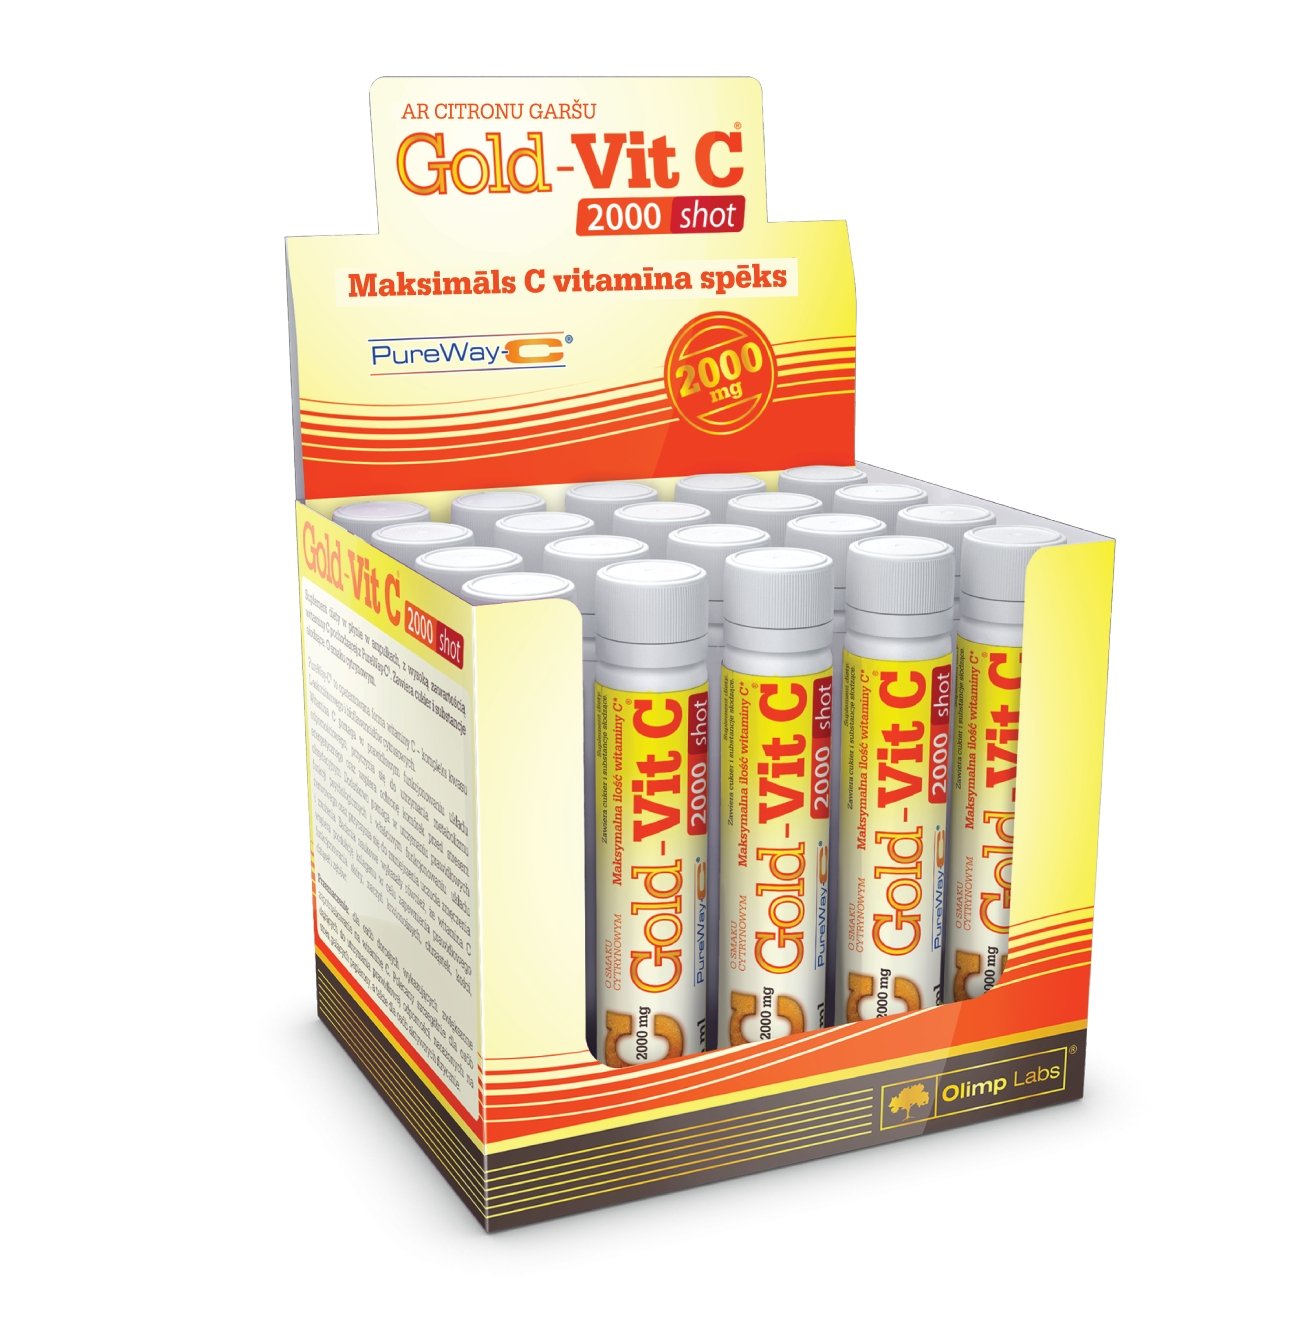 Olimp Labs Витамины и минералы Olimp Gold-Vit C 2000 Shot, 10*25 мл, , 250 